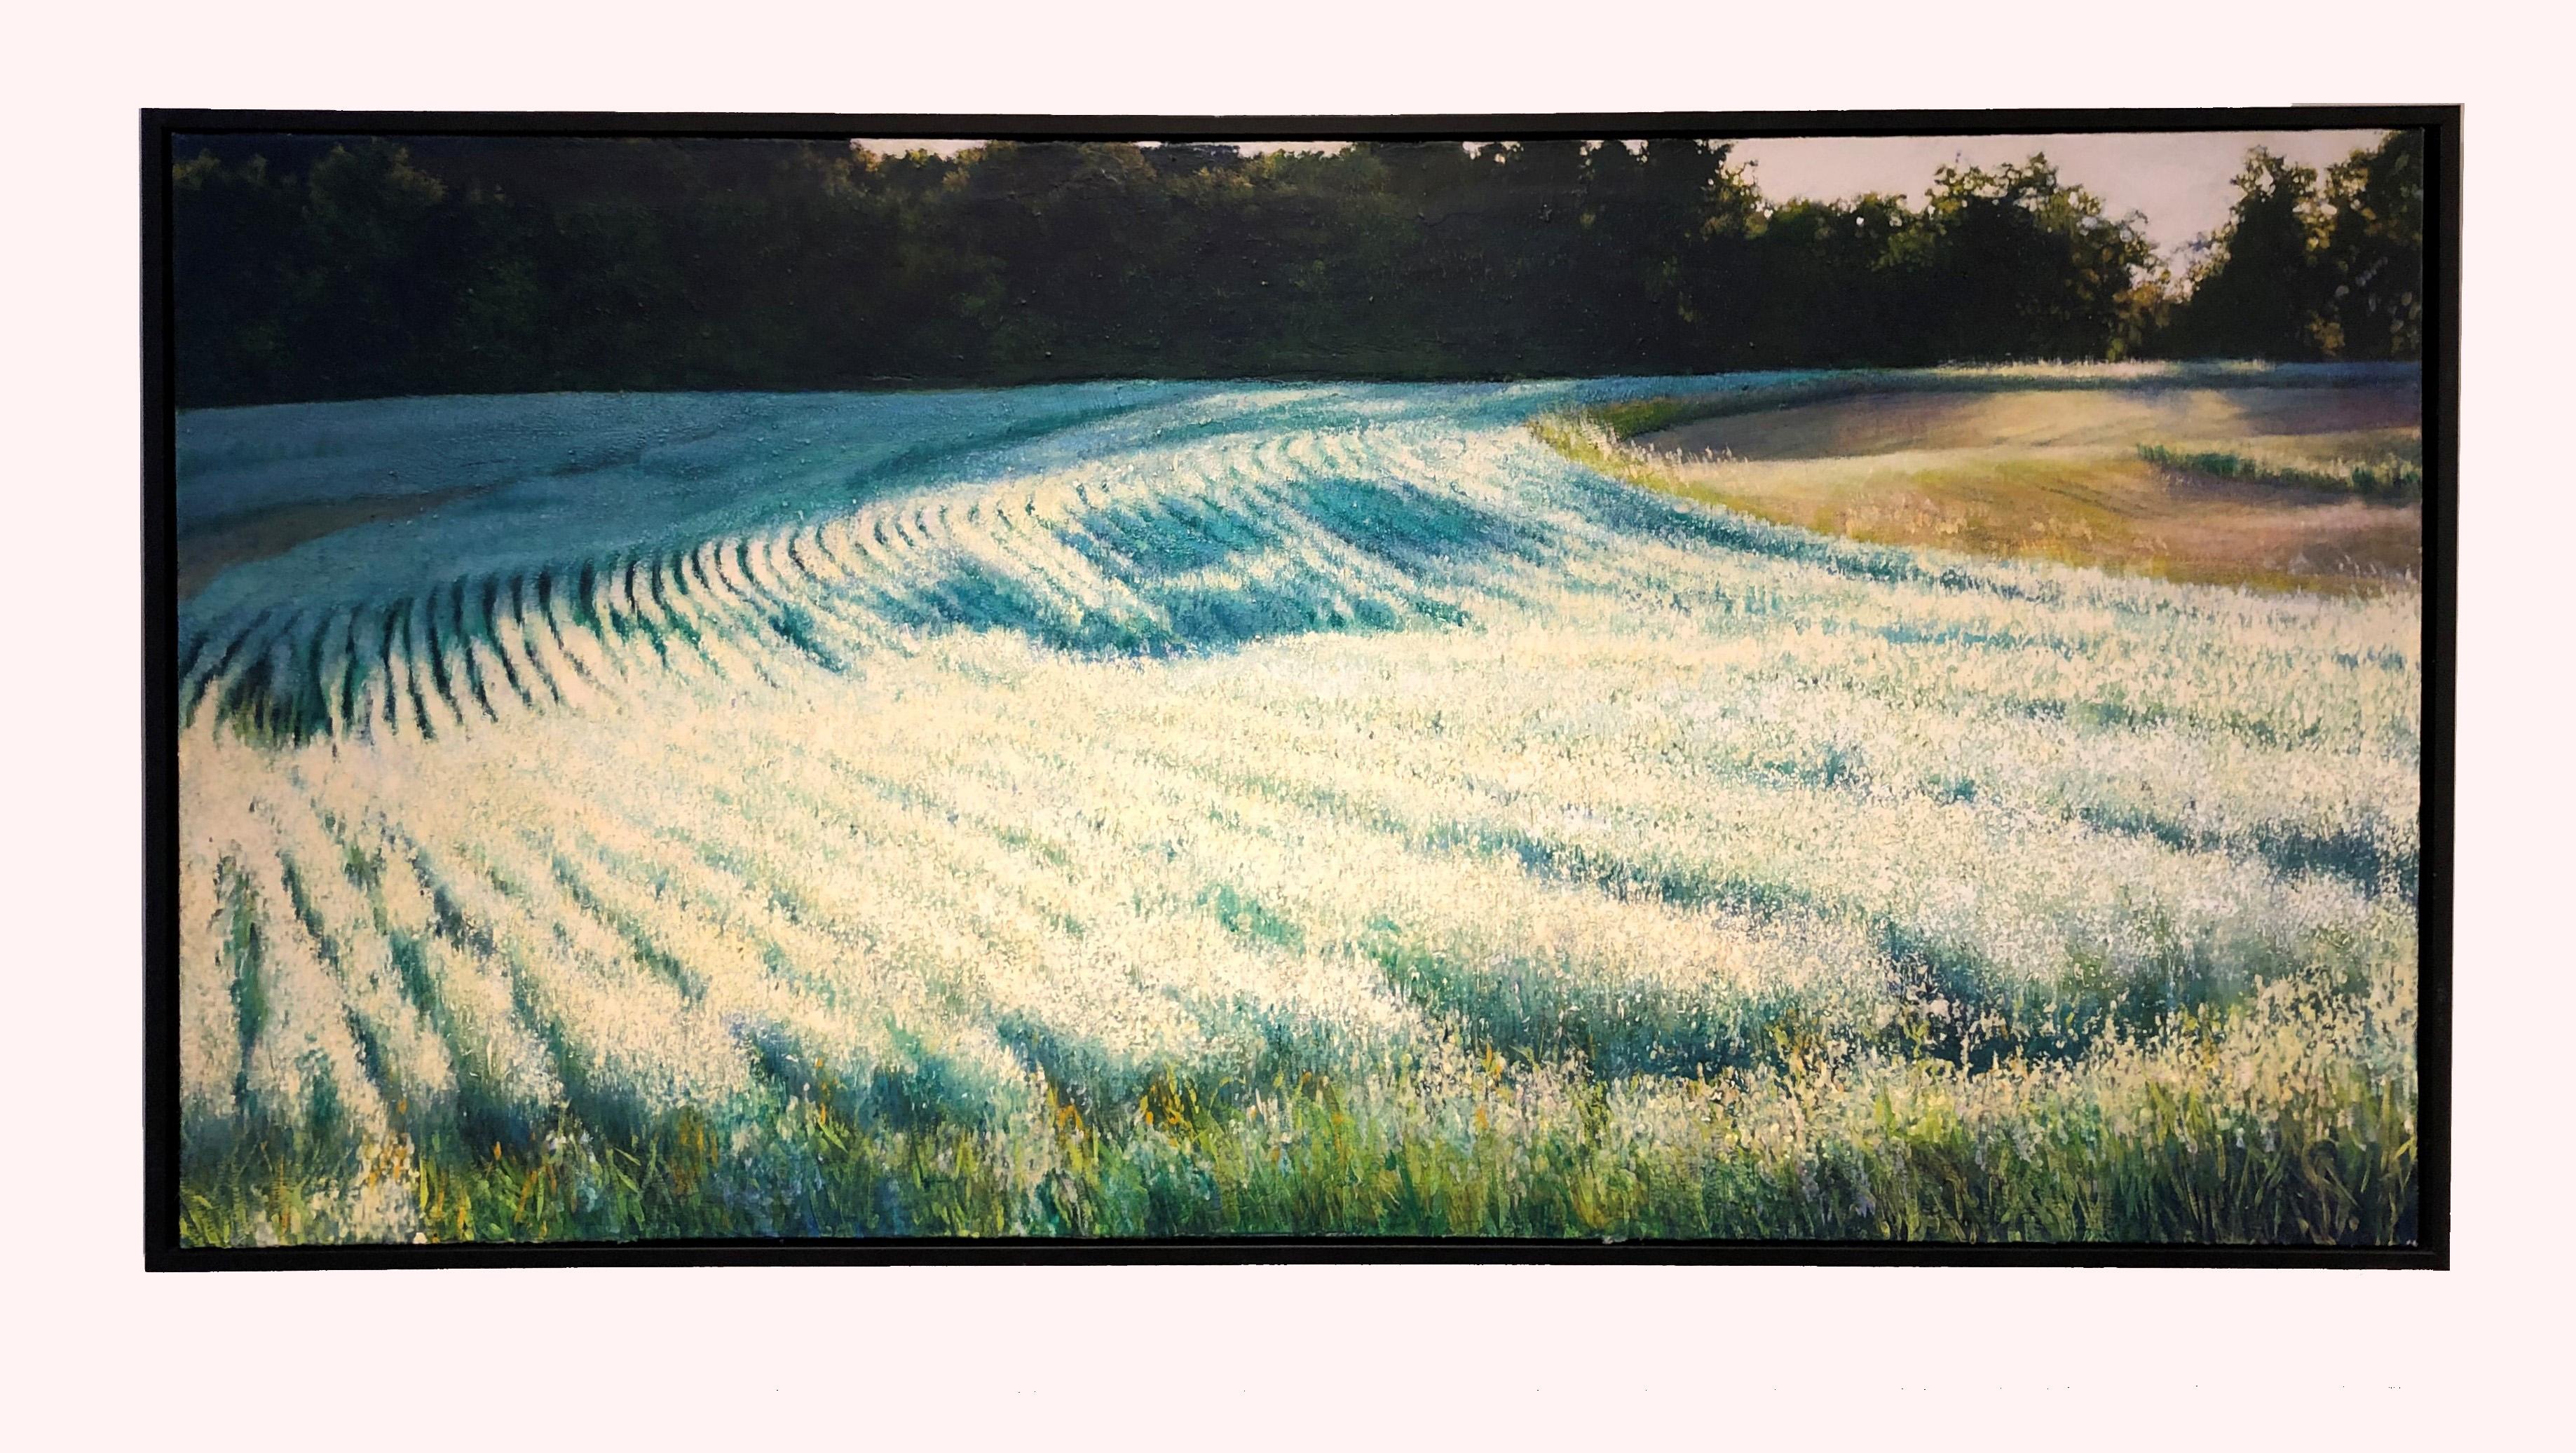 Barley Field - In Full Bloom on Rolling Hills, Oil on Canvas - Painting by Deborah Ebbers